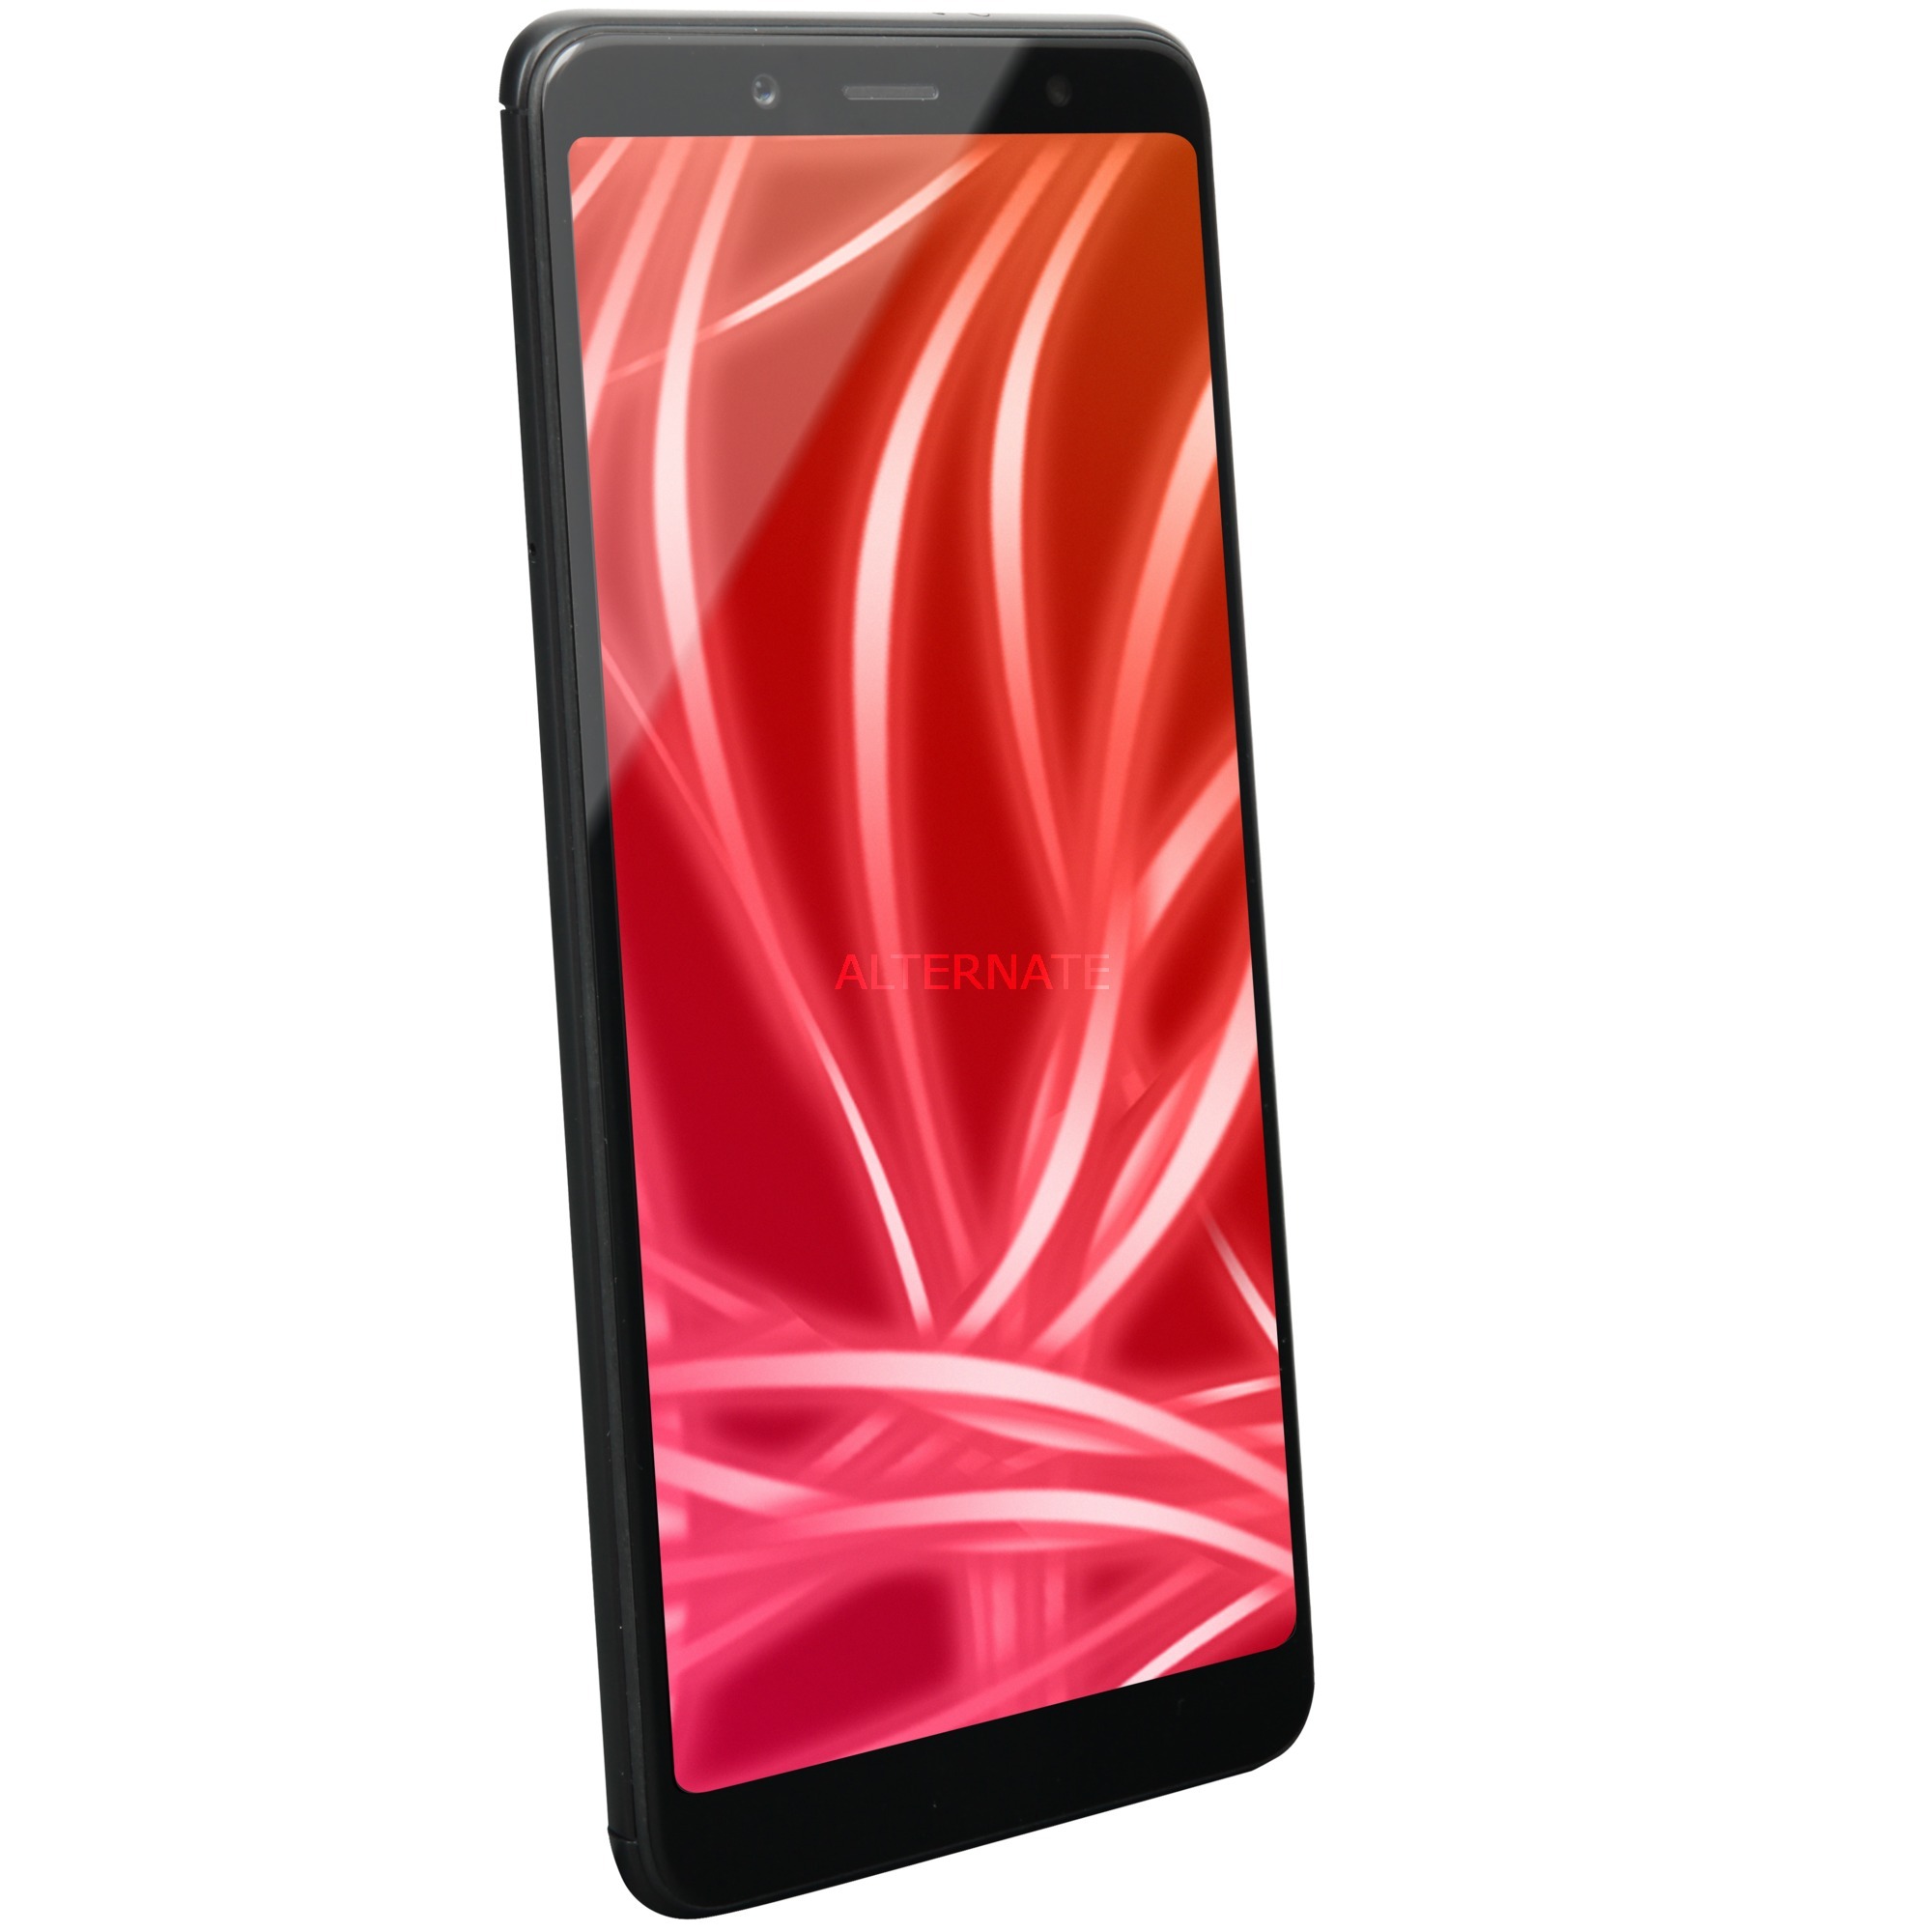 Redmi Note 5 15,2 cm (5.99") 3 GB 32 GB Hybrid Dual SIM 4G Czarny 4000 mAh, Komórka